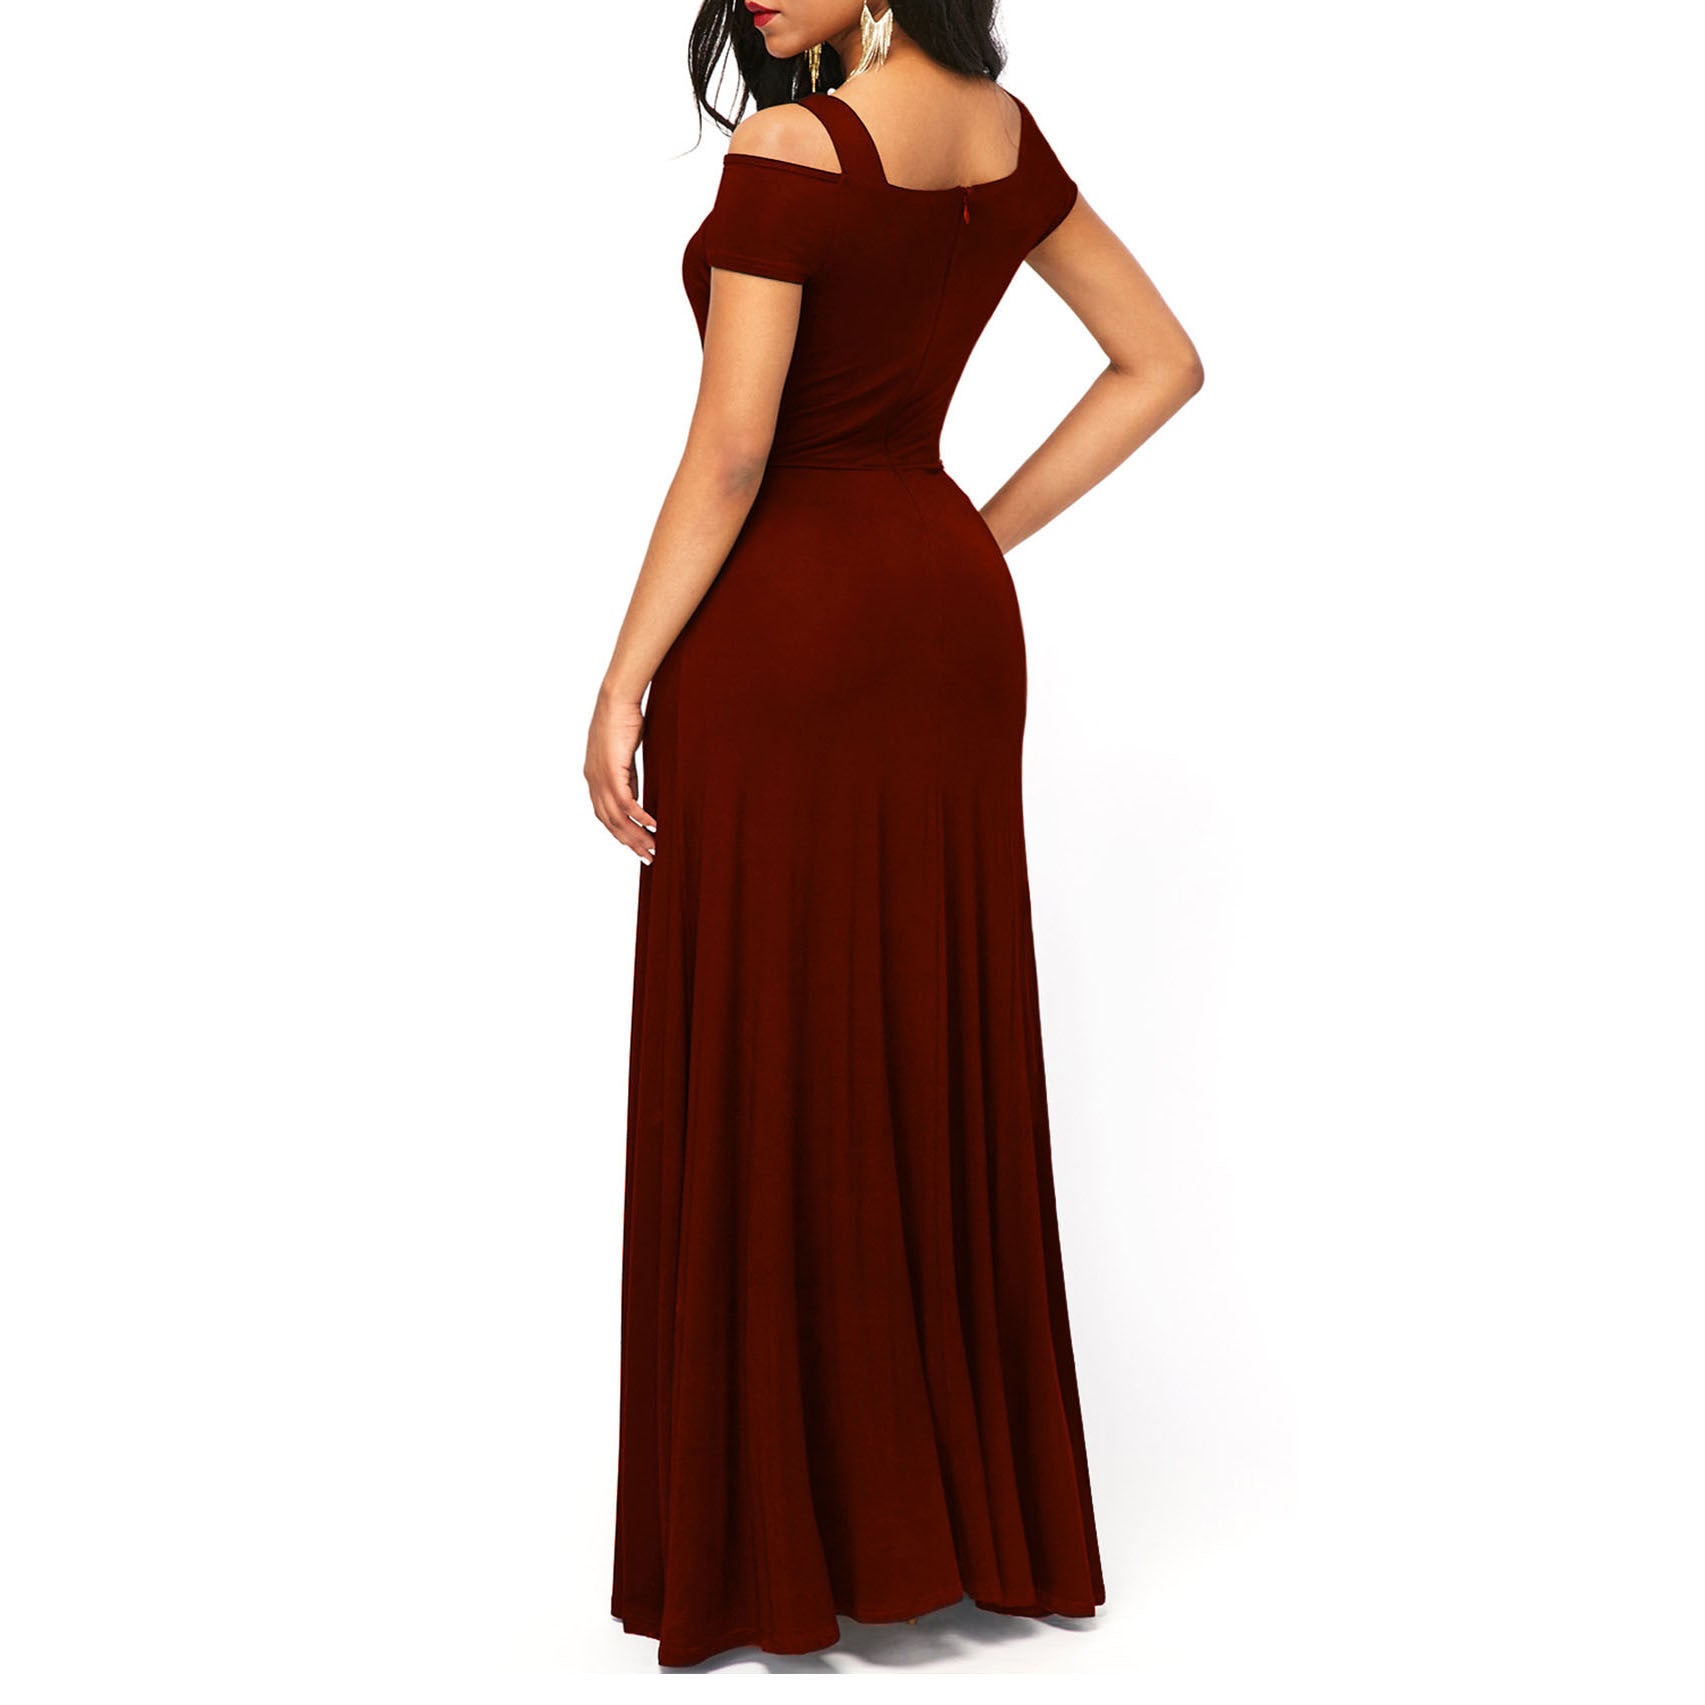 Elegant Strapless Slim Fit Cocktail Dress